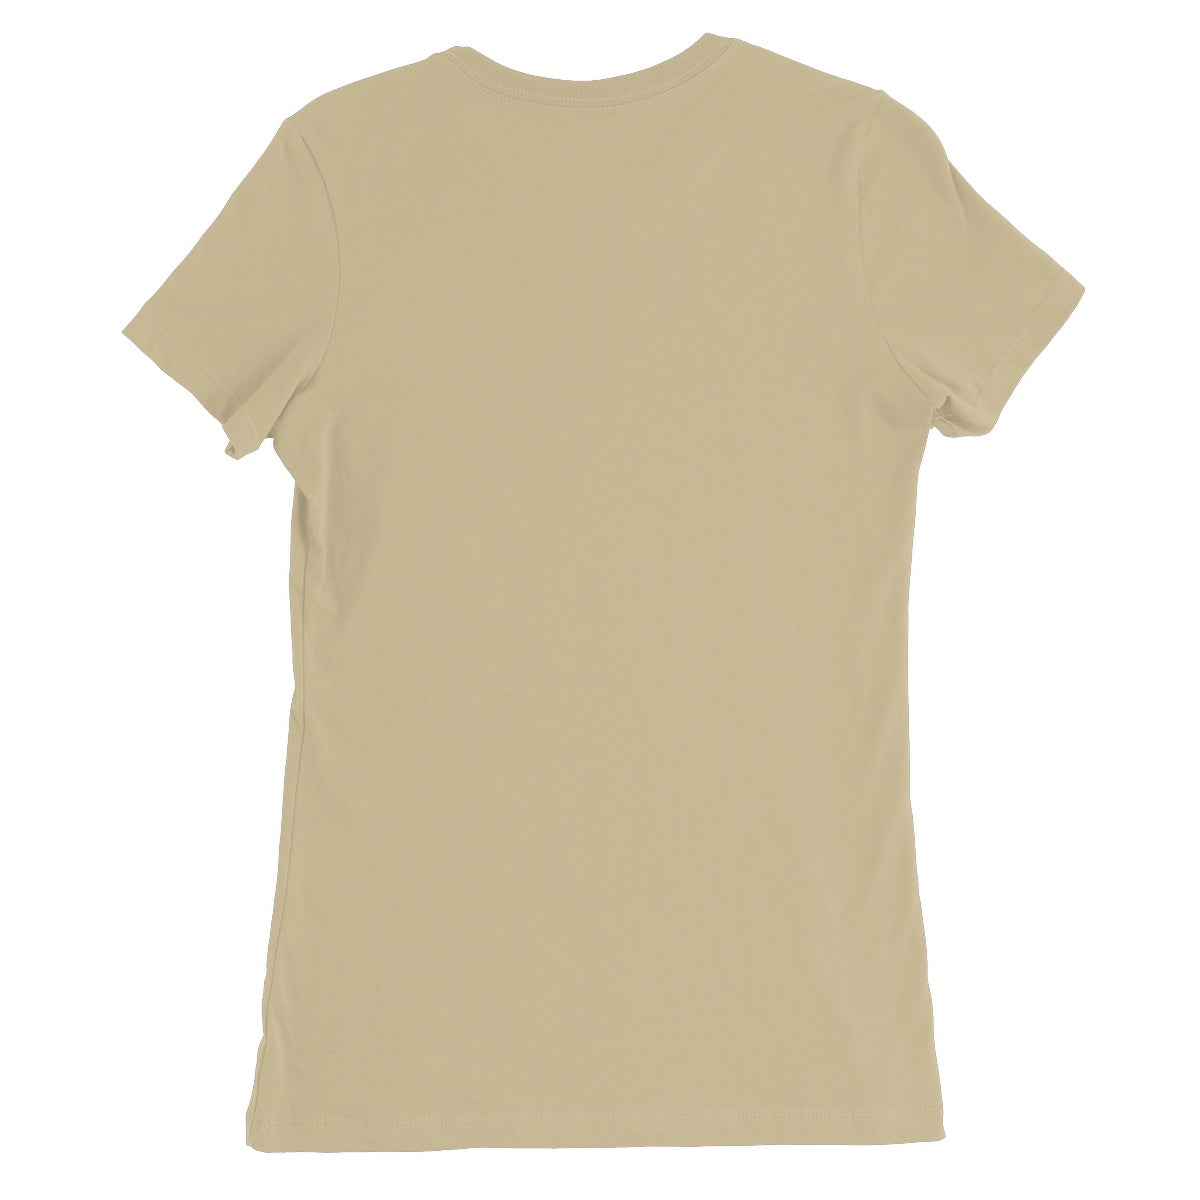 Dipole, Xray Sphere Women's Favourite T-Shirt